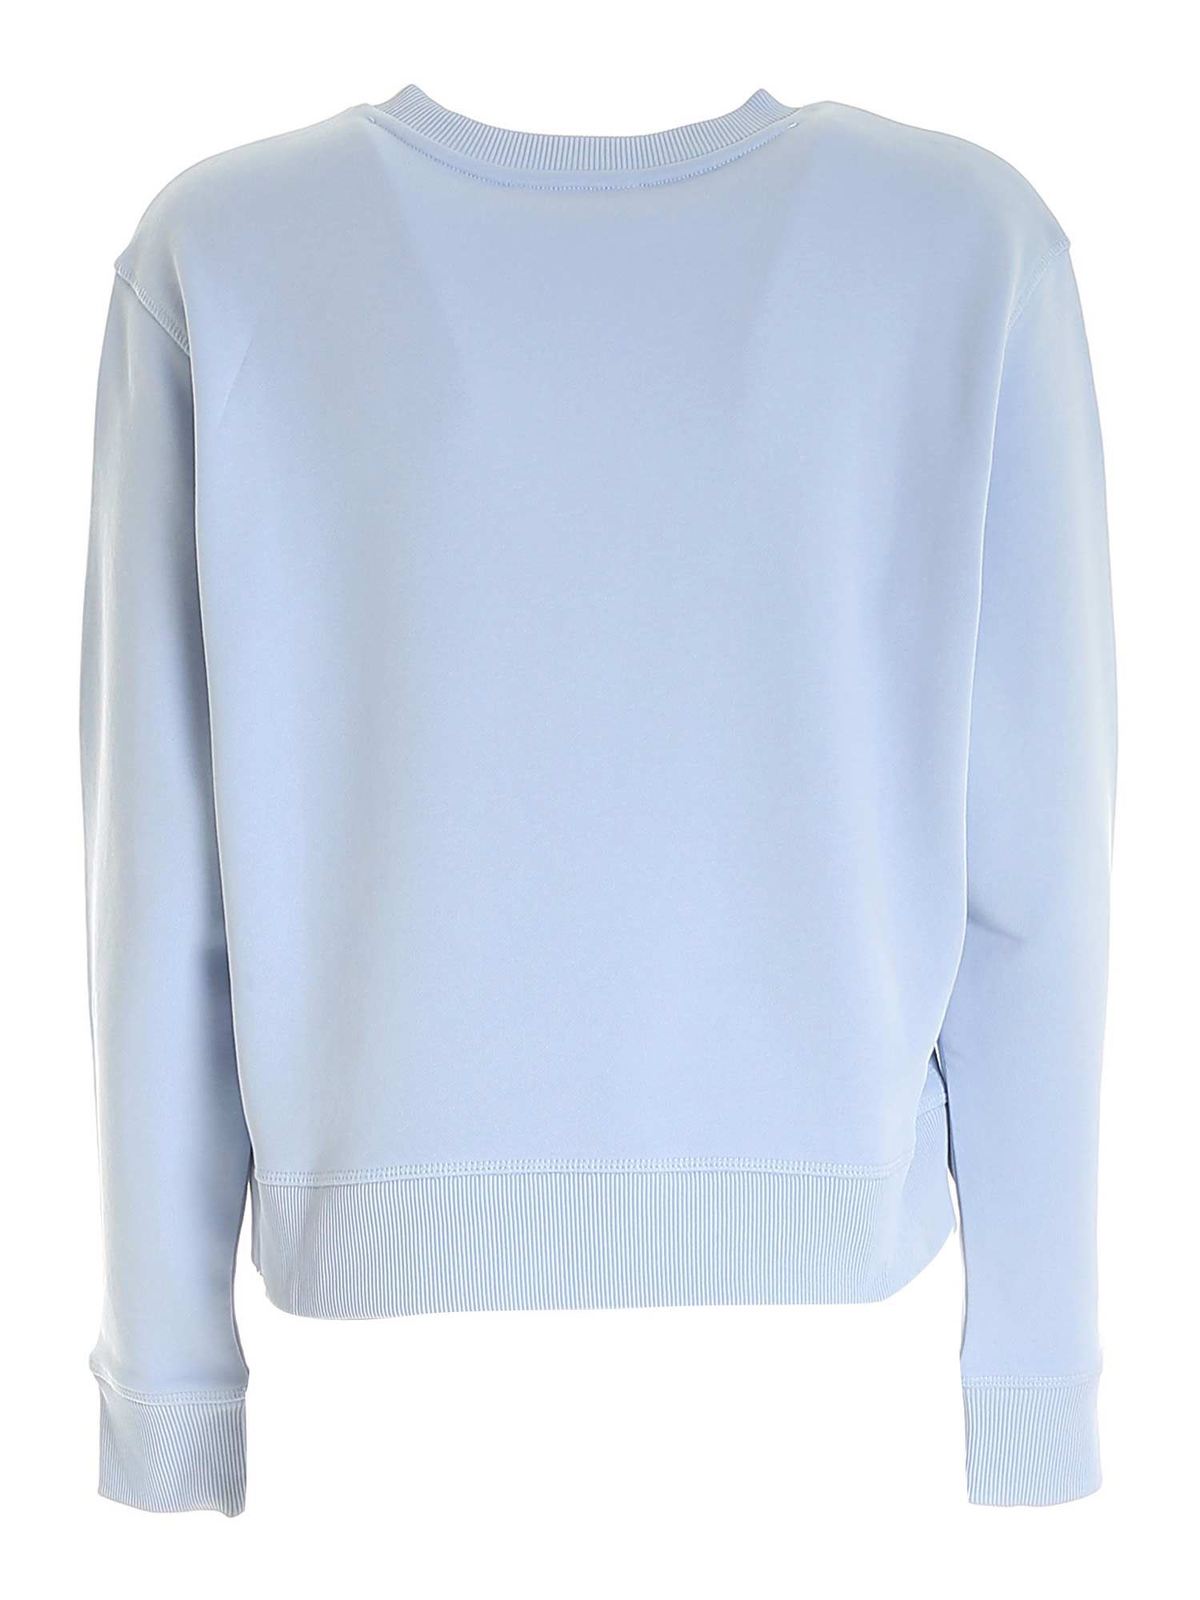 Tommy Hilfiger - Relaxed Box sweatshirt in light blue - Sweatshirts ...